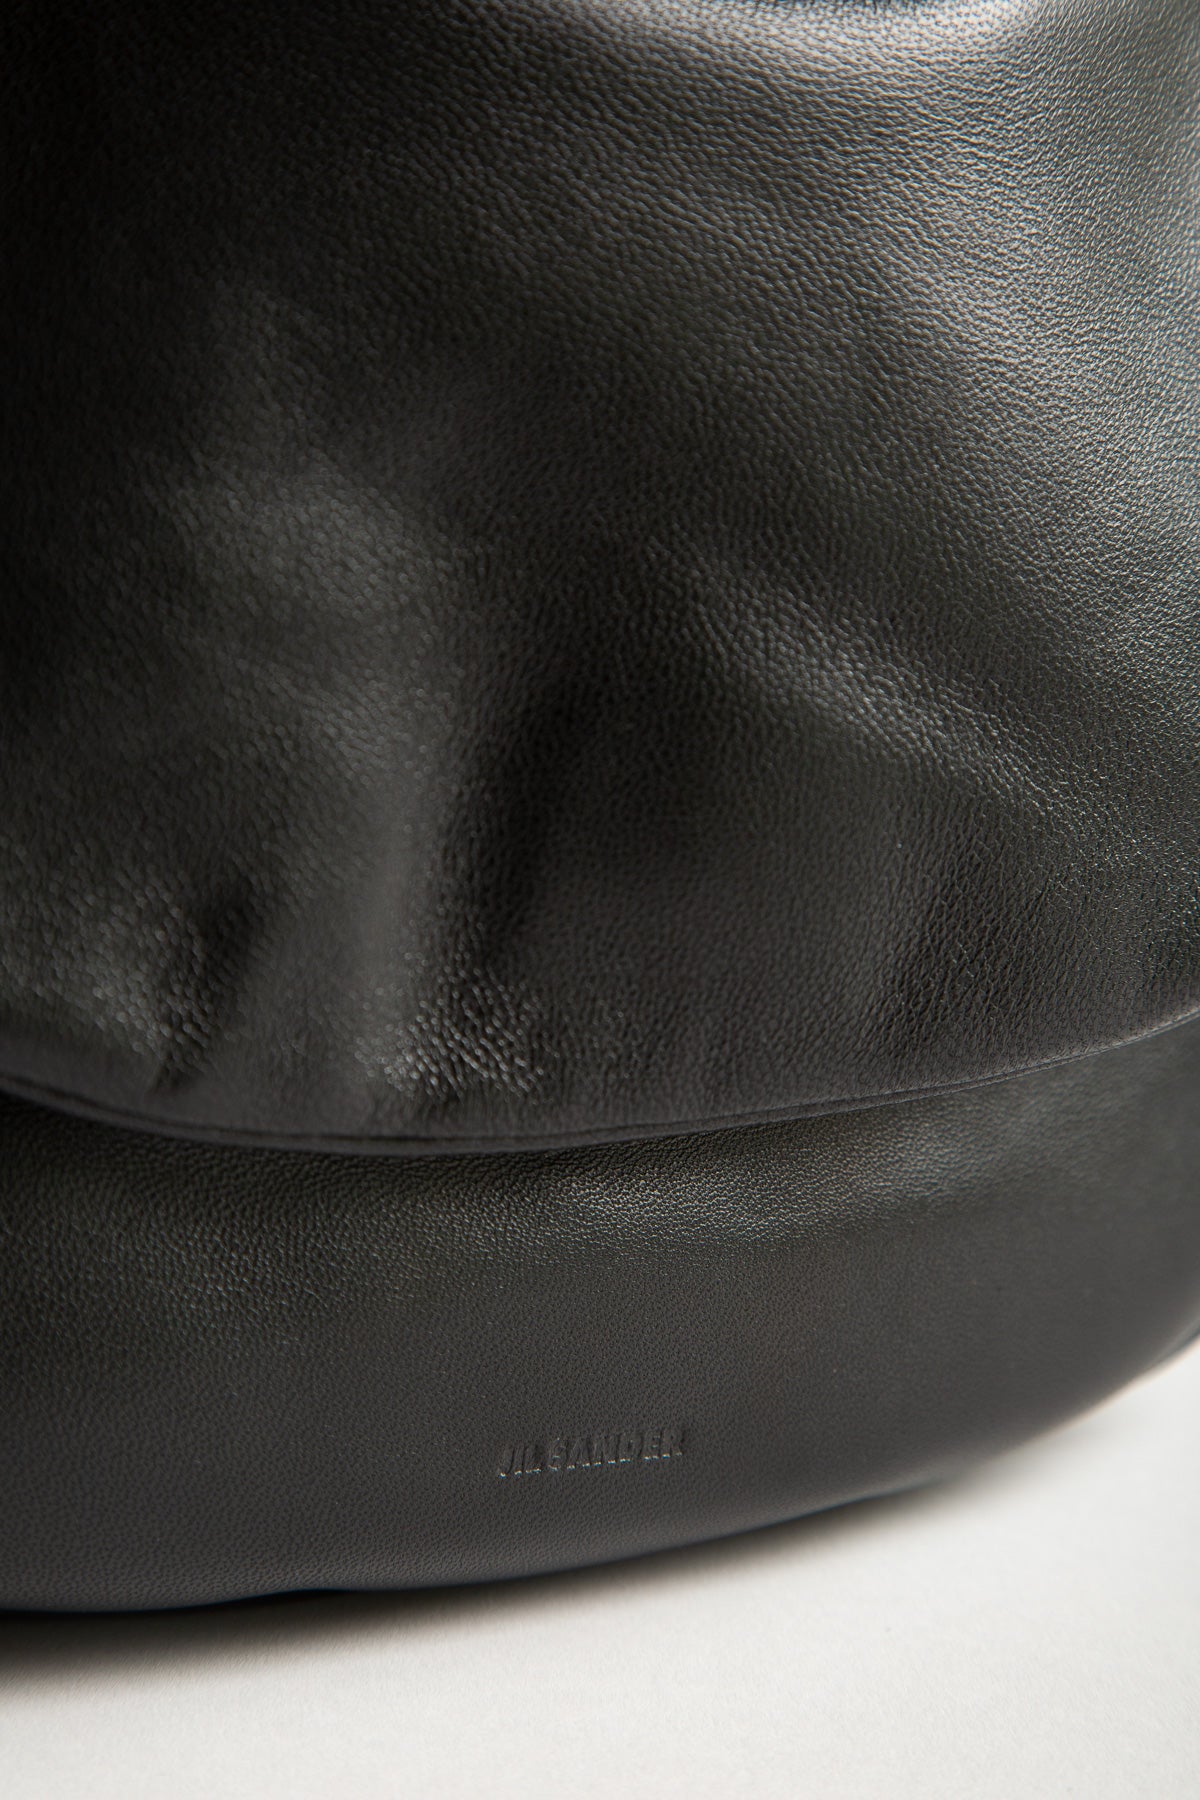 Jil Sander Medium Tangle Leather Shoulder Bag - Farfetch